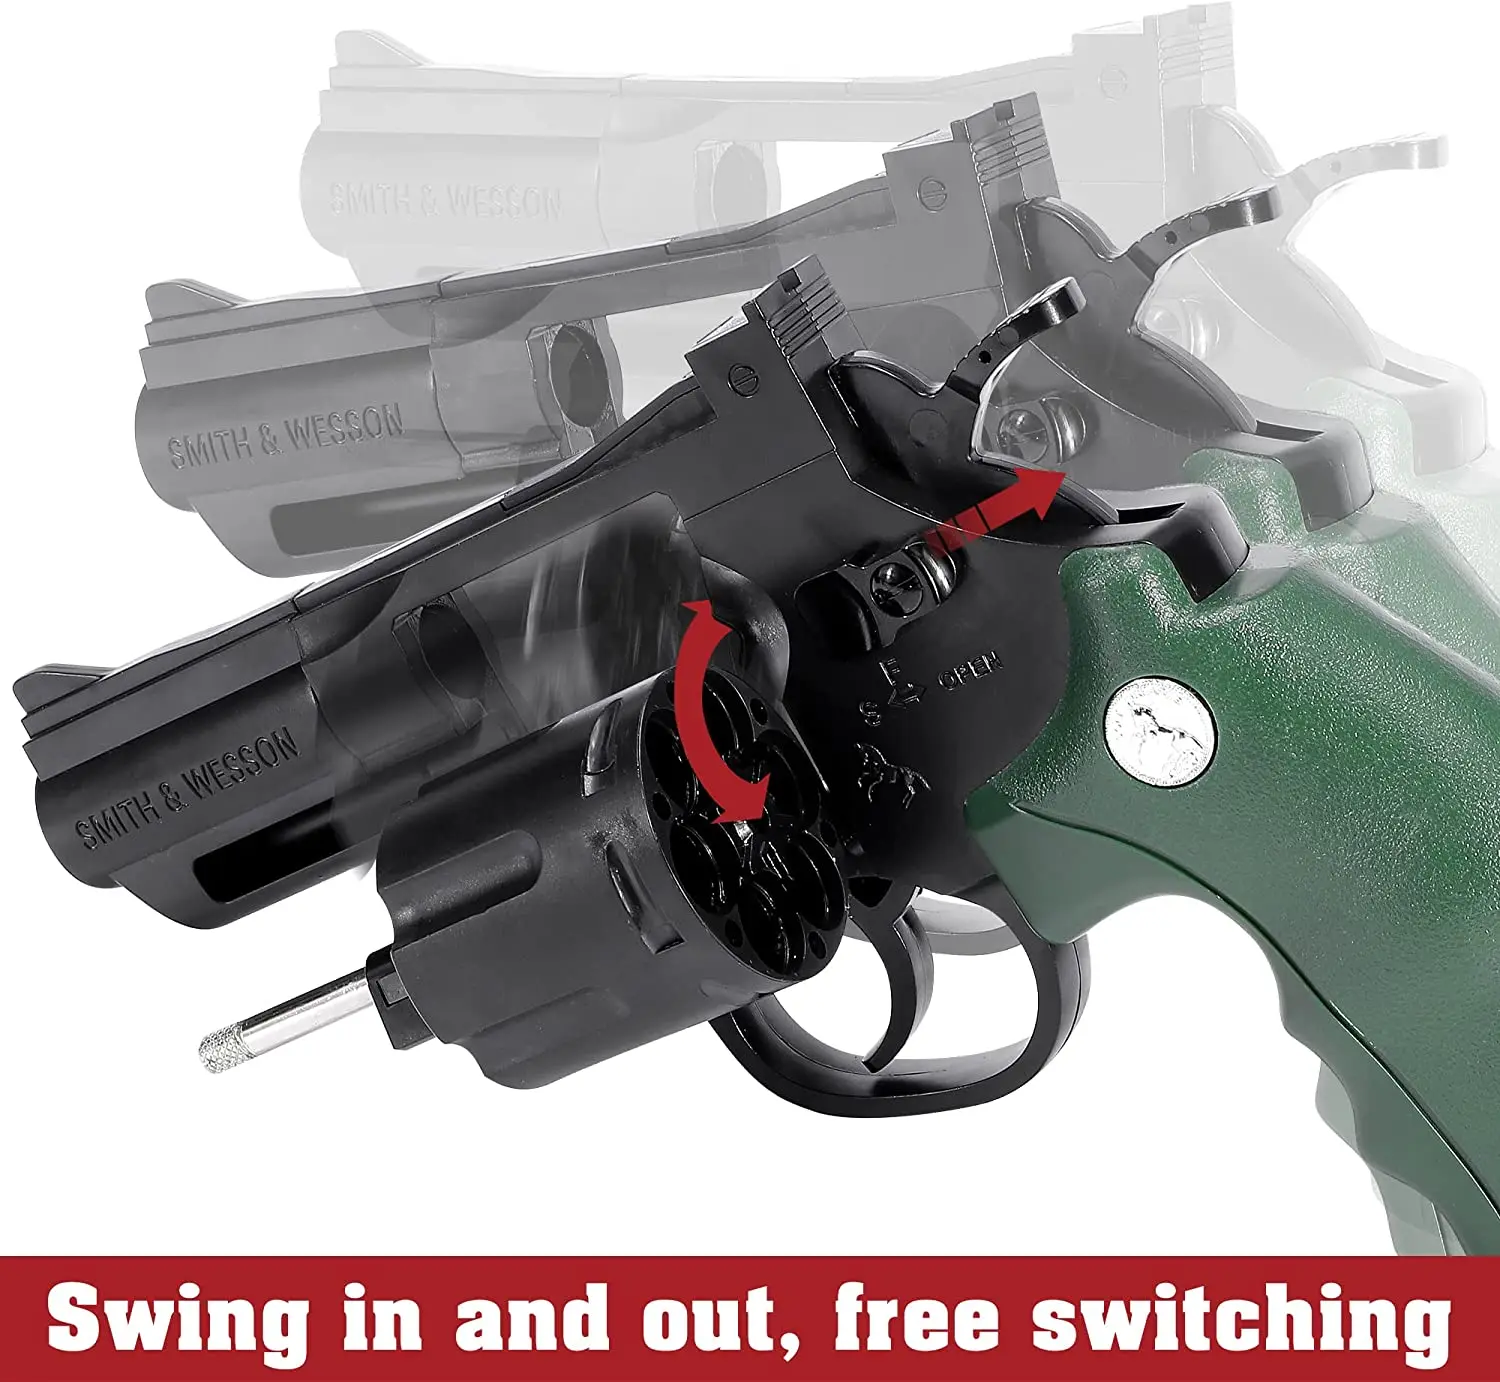 2022 Nova arma de brinquedo de bala macia pode disparar modelo de pistola  de brinquedo